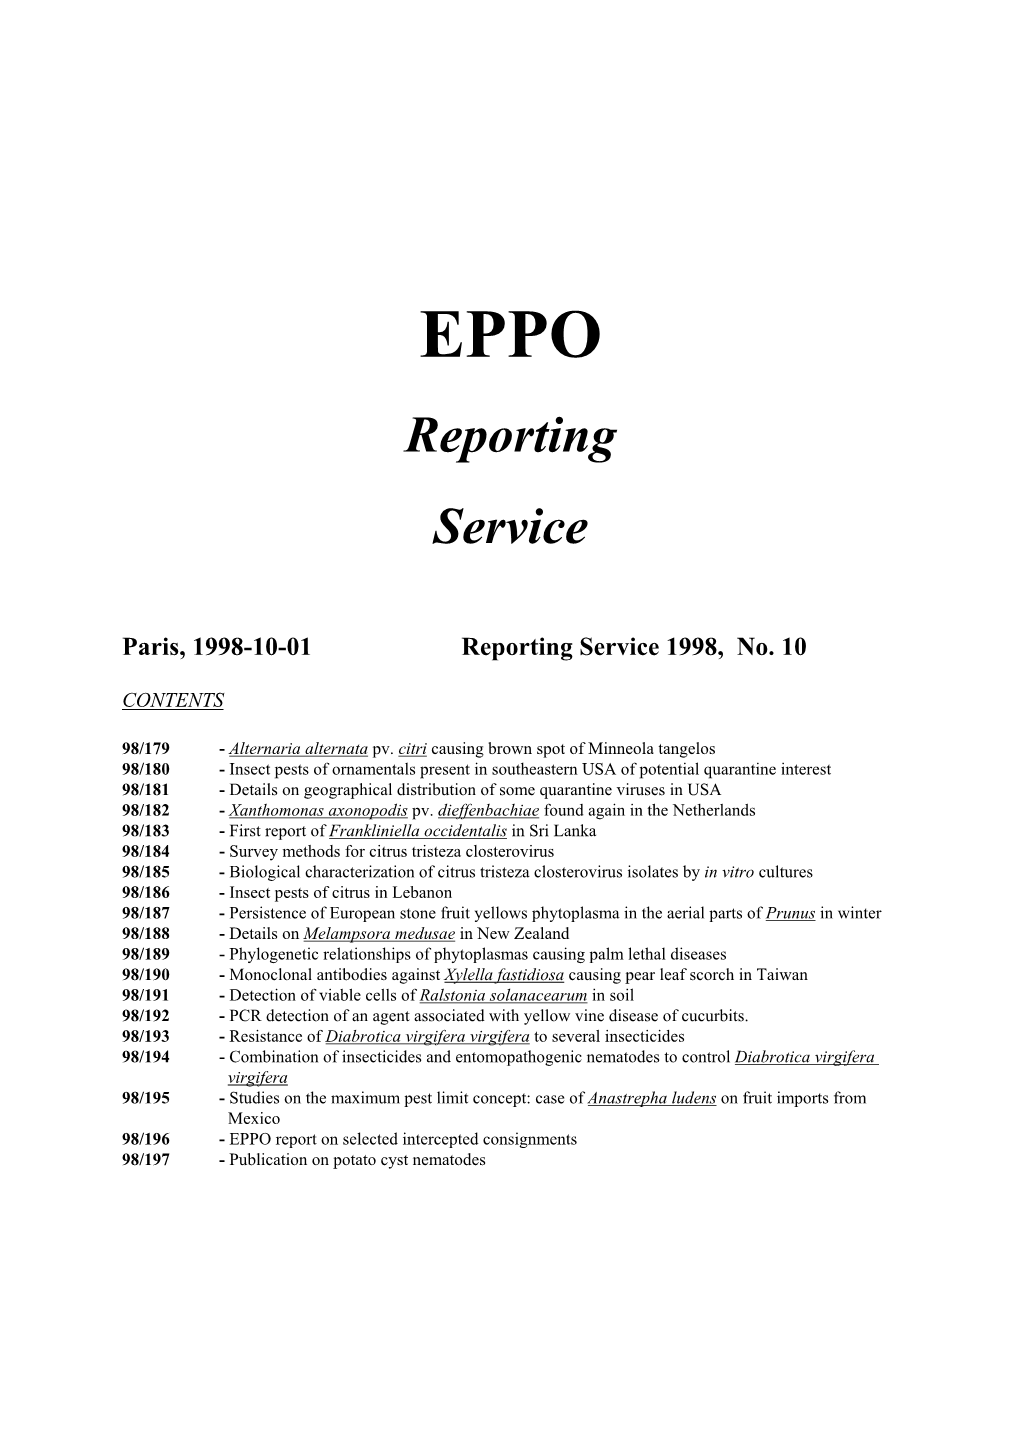 Reporting Service 1998, No